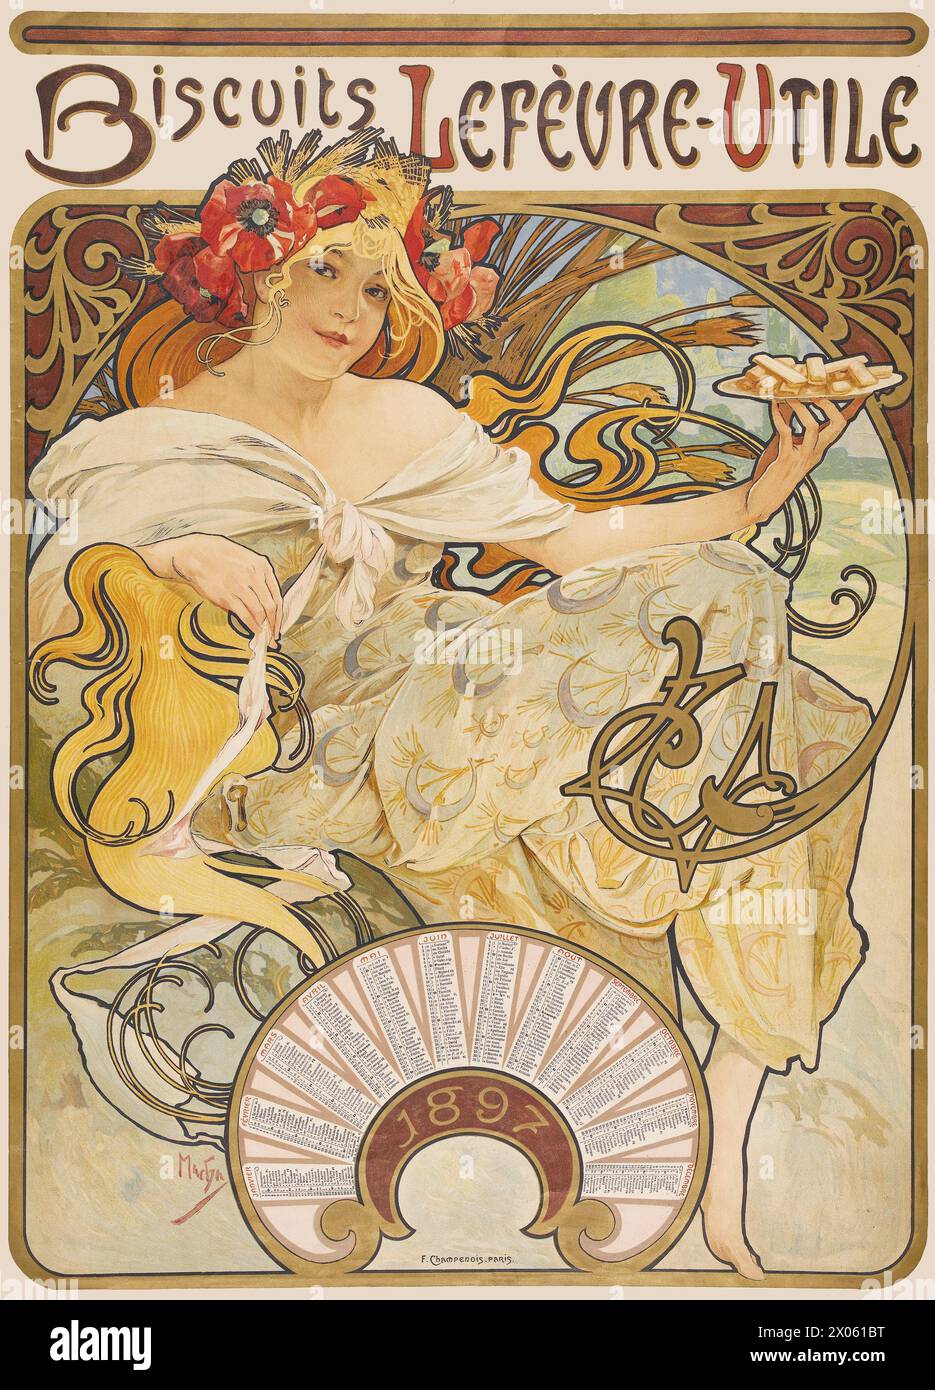 Alphonse Mucha - Calendario Art Nouveau, 1897 - Galletas Lefèvre-Utile cookies - versión retocada Foto de stock